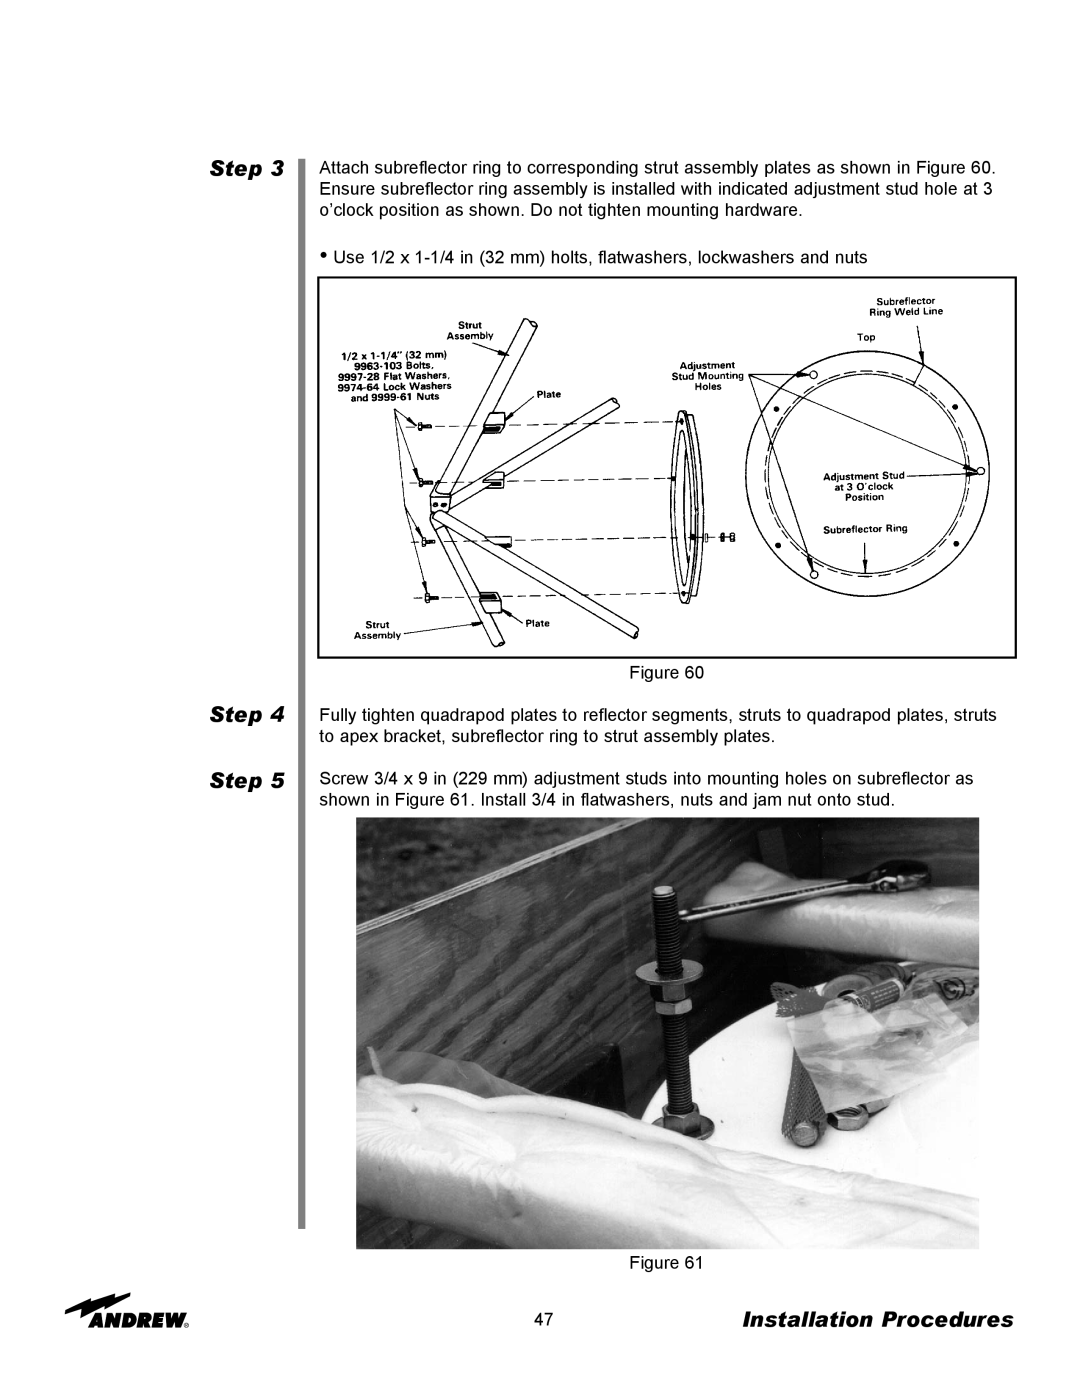 Andrew ES73 manual Step Step Step, Installation Procedures, Figure 